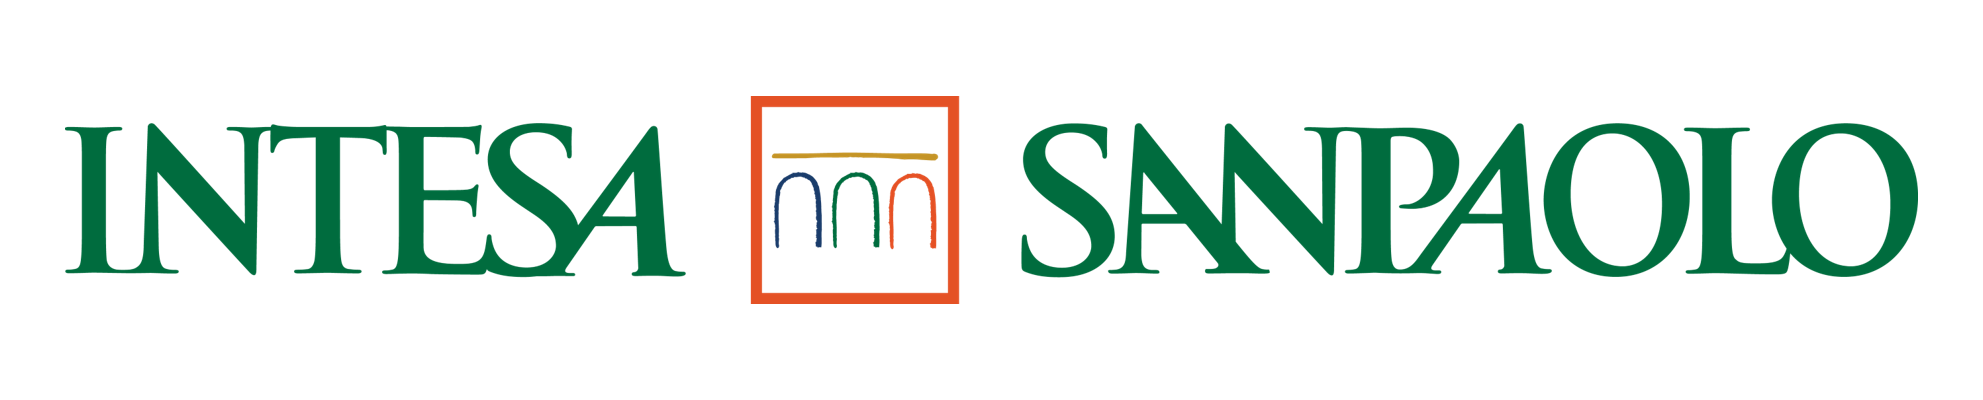 Intesa sanpaolo. Интеза Сан Паоло. Intesa Sanpaolo логотип. Итальянский банк Intesa Sanpaolo. Логотип банка Интеза.